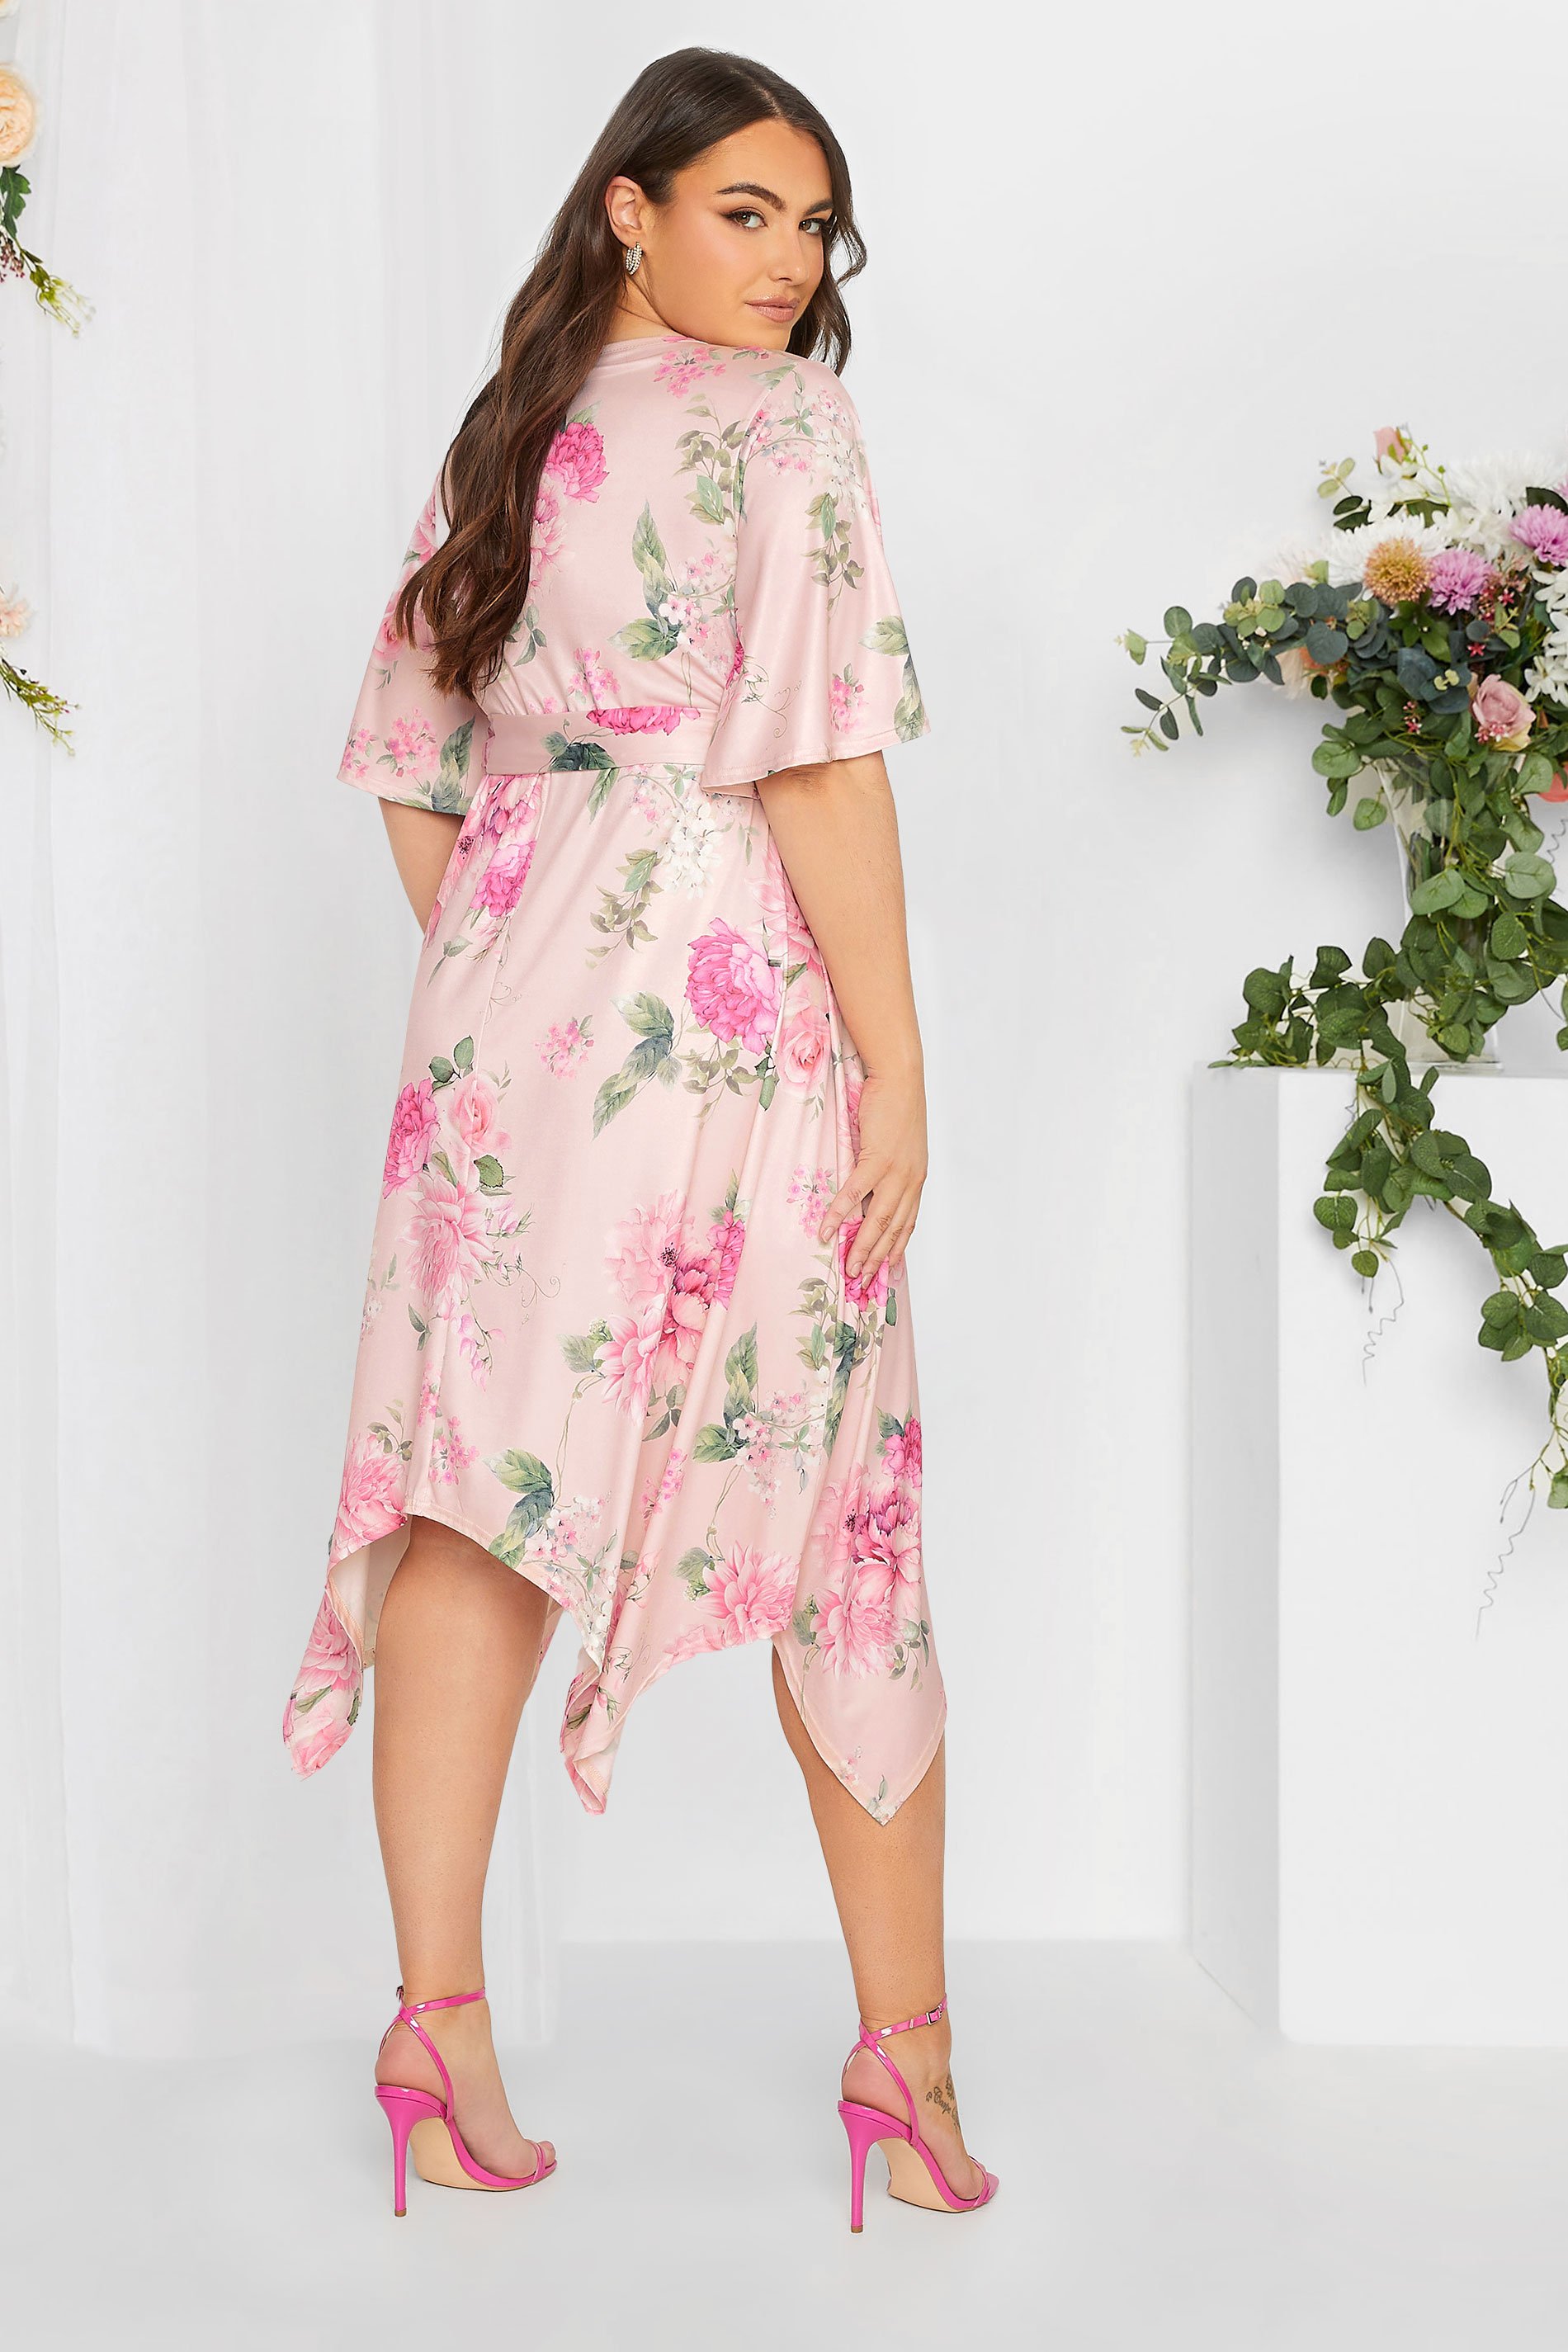 YOURS LONDON Curve Plus Size Light Pink Floral Hanky Hem Dress | Yours Clothing  3